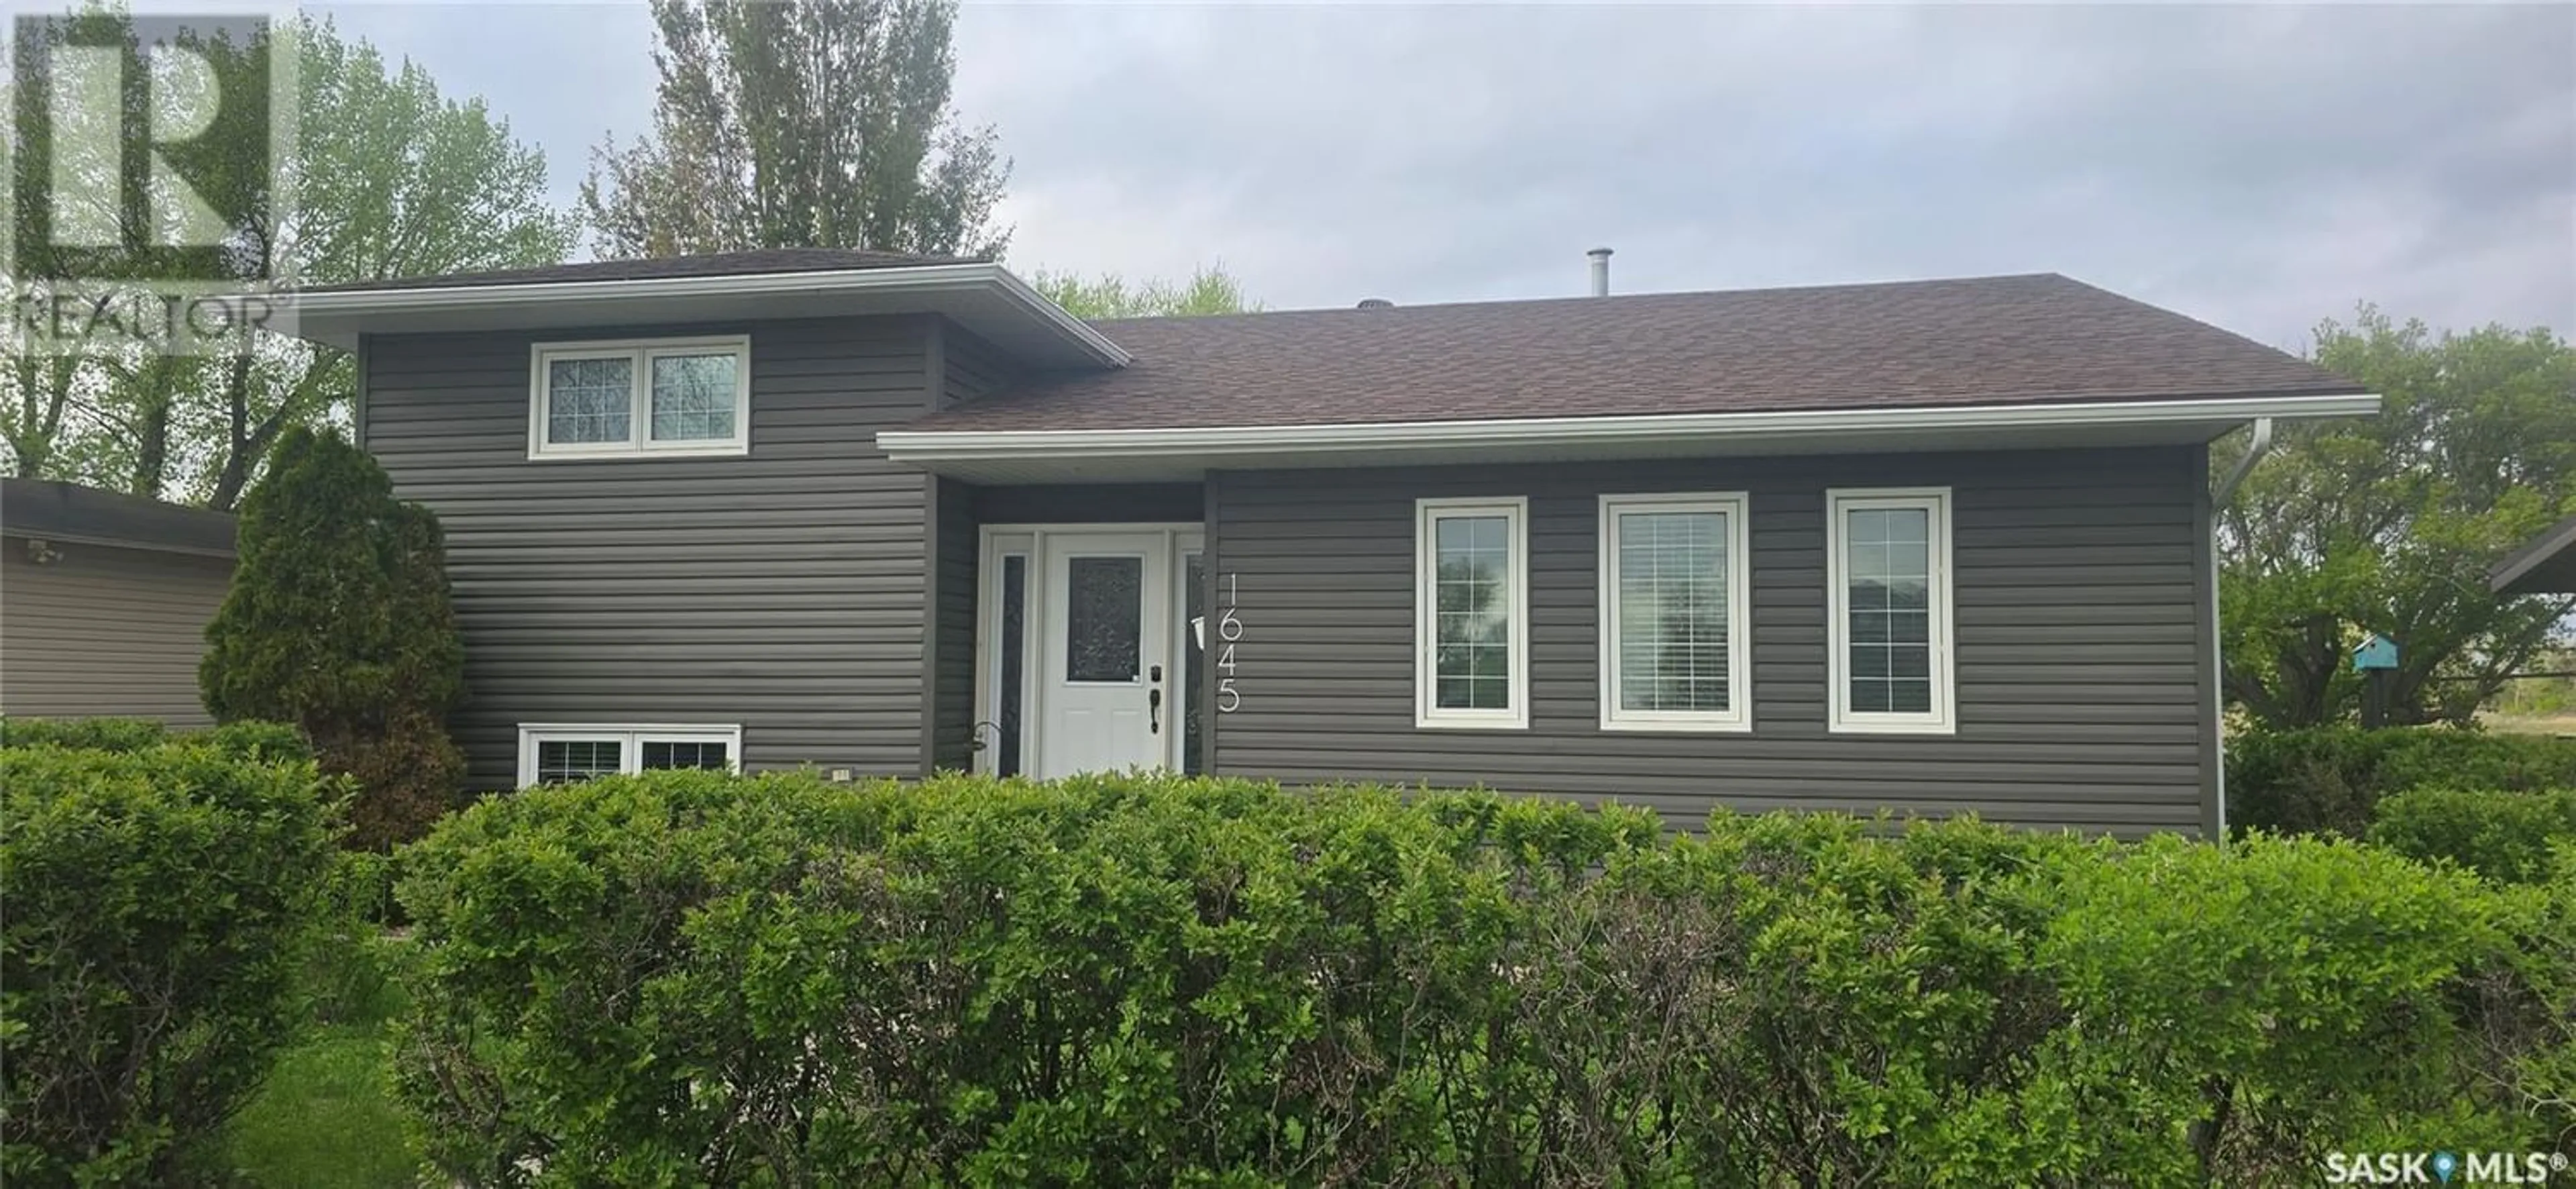 Home with vinyl exterior material for 1645 3rd STREET, Estevan Saskatchewan S4A0S7